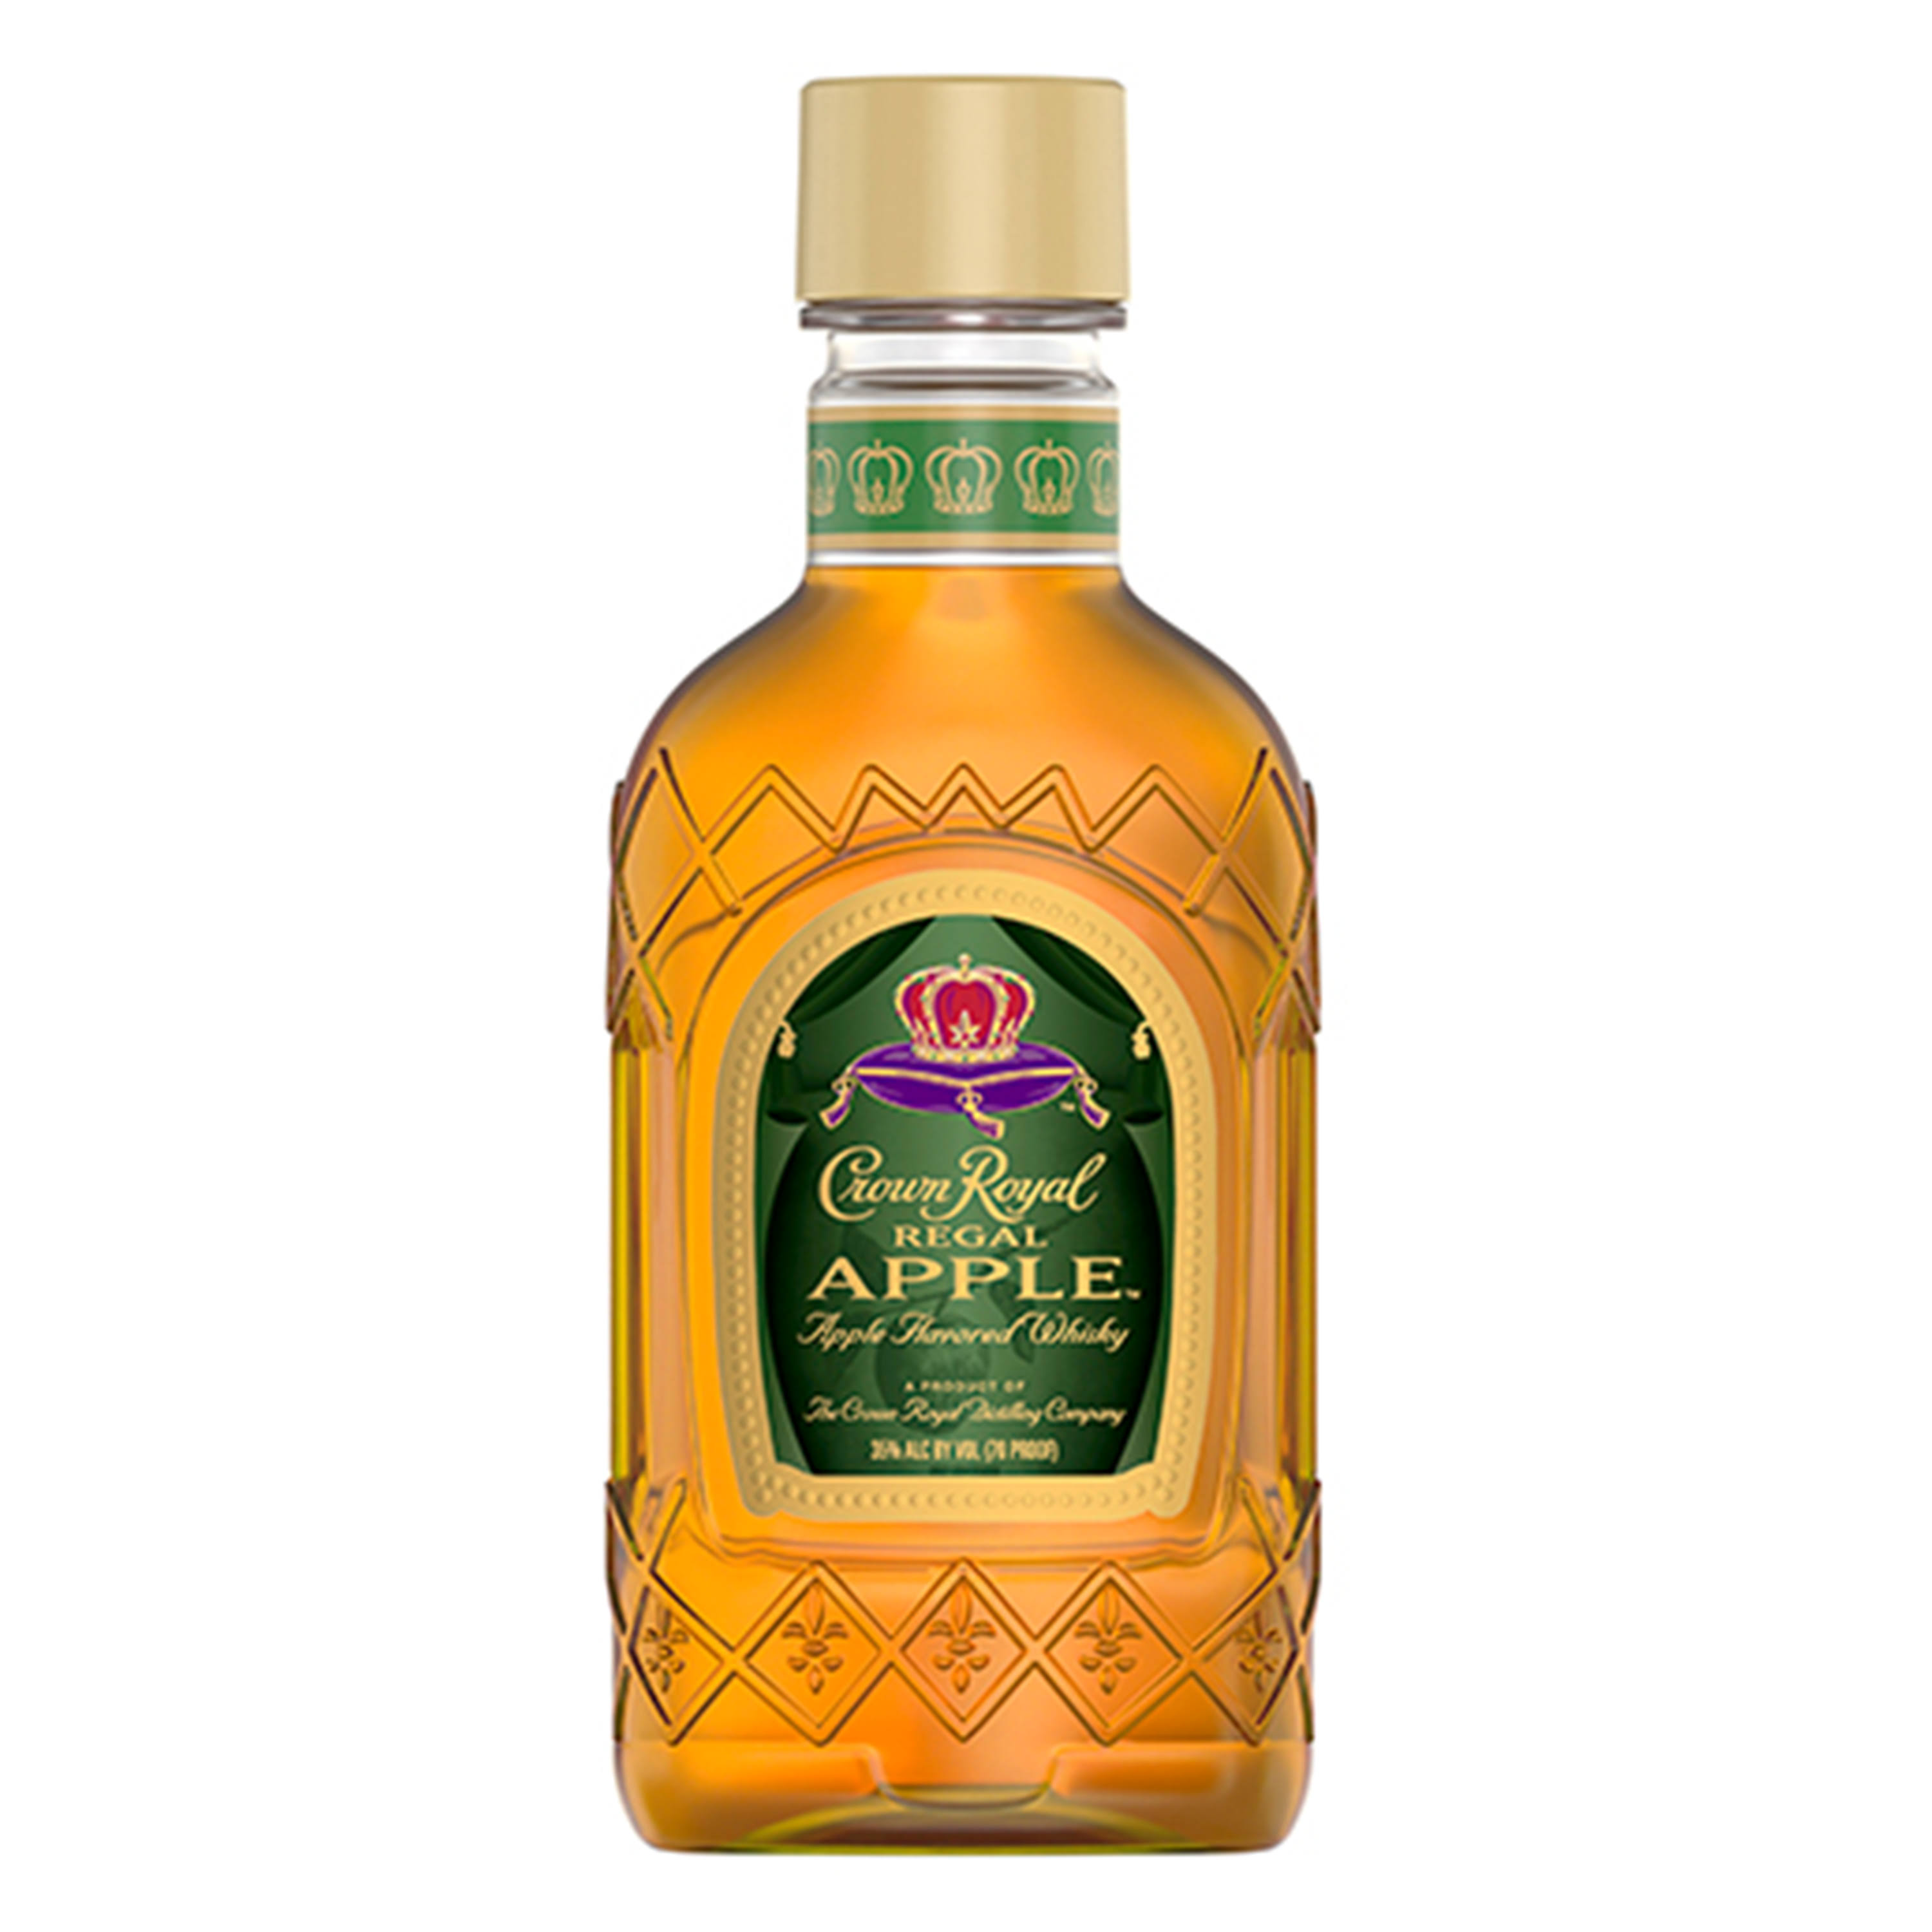 Crown Royal Whisky, Apple Flavored, Regal Apple - 200 ml